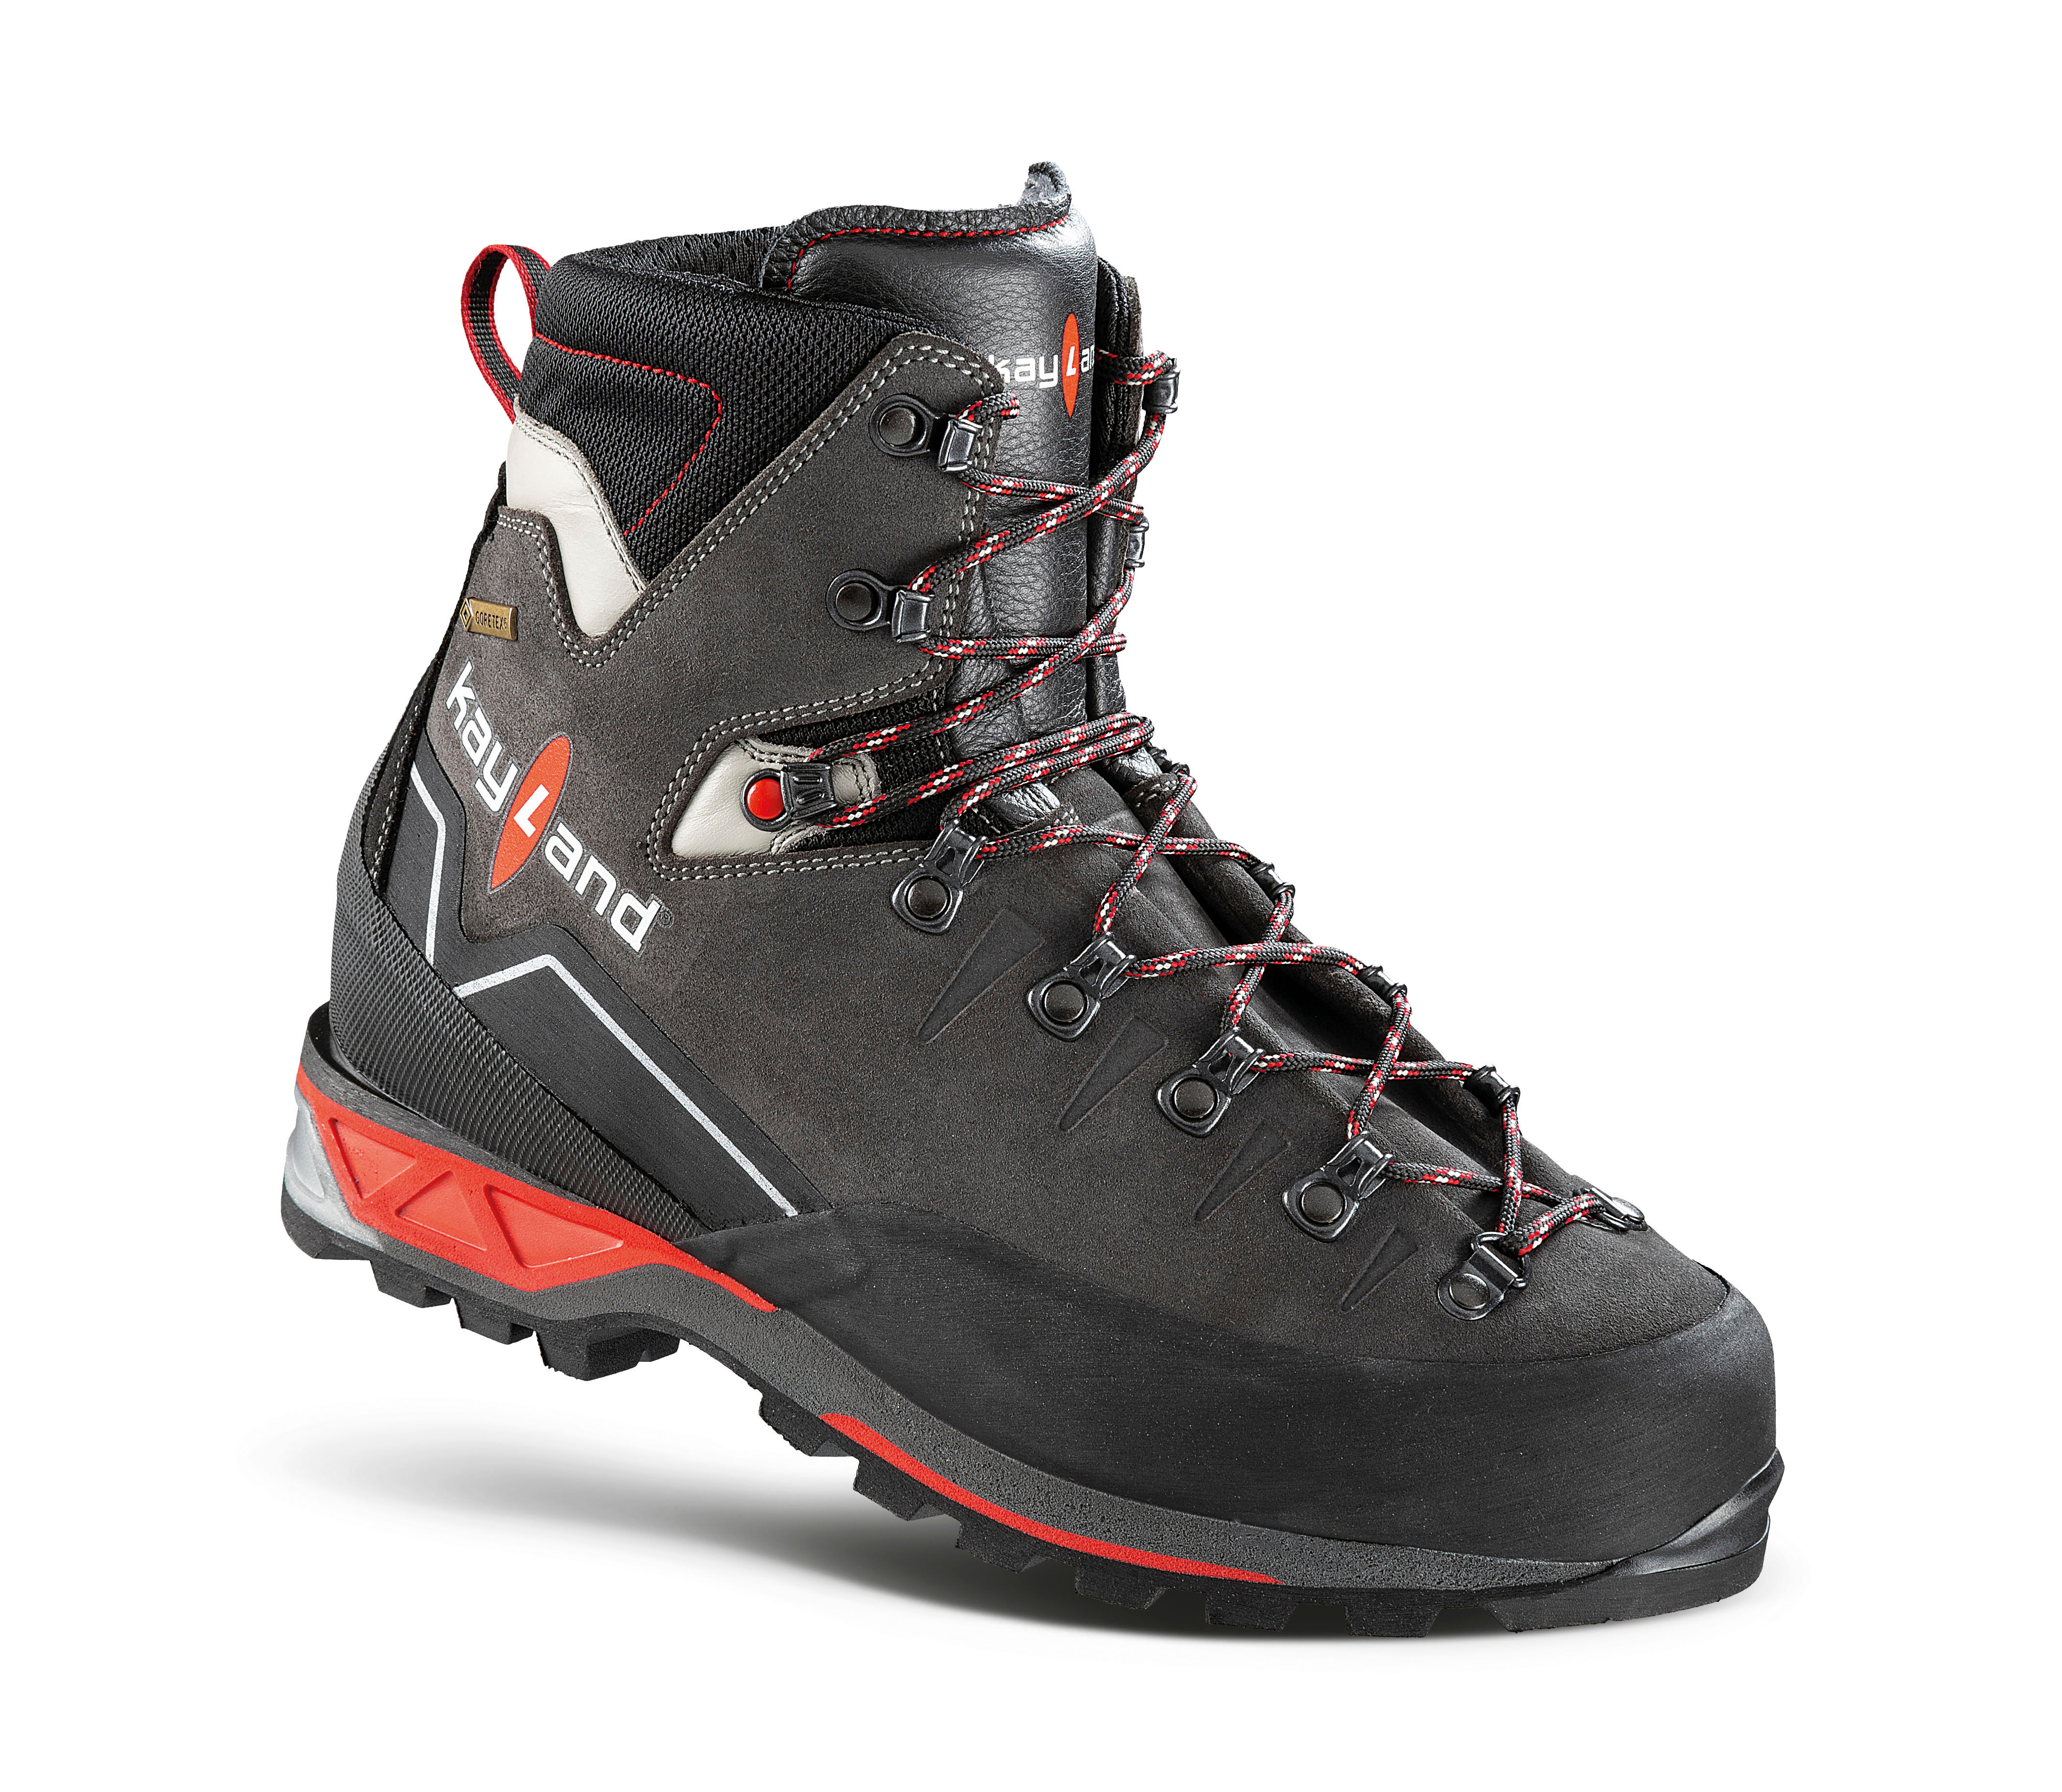 Kayland Super Rock GTX - Mountaineering boots - Men's